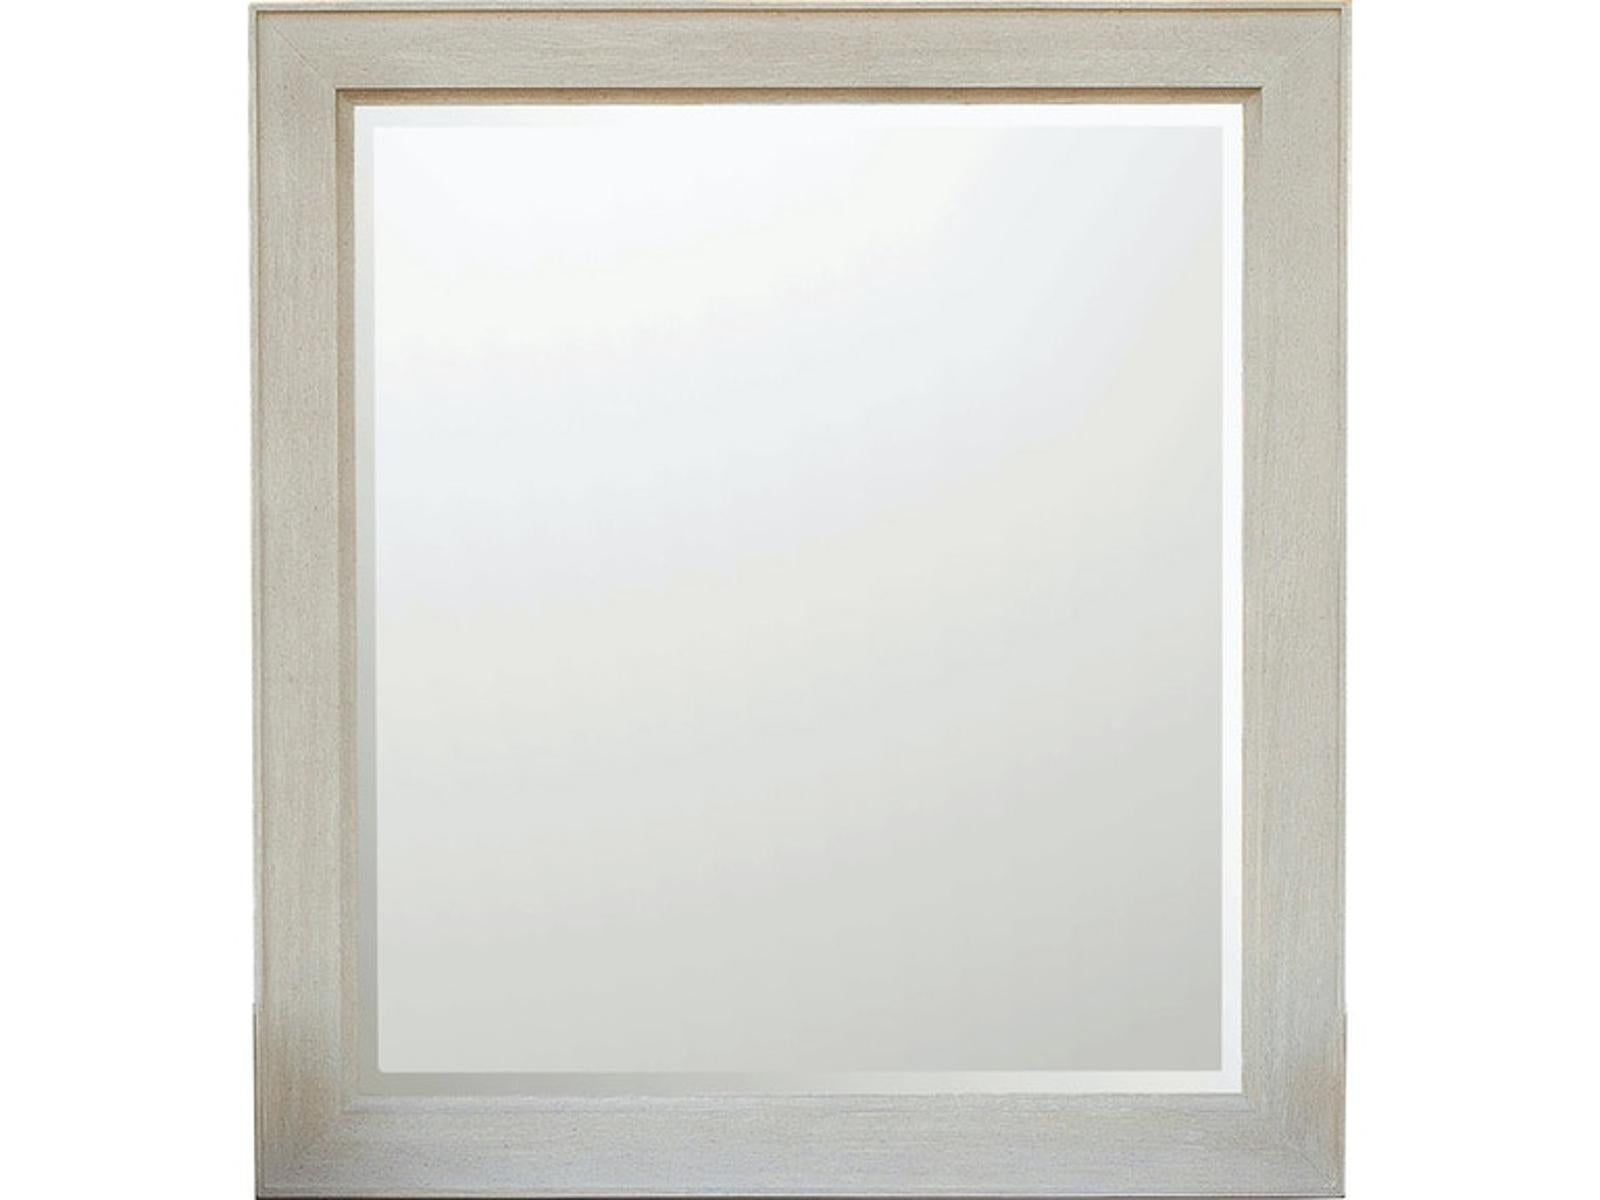 Pulaski Furniture Lex Street Vanity Mirror in White image